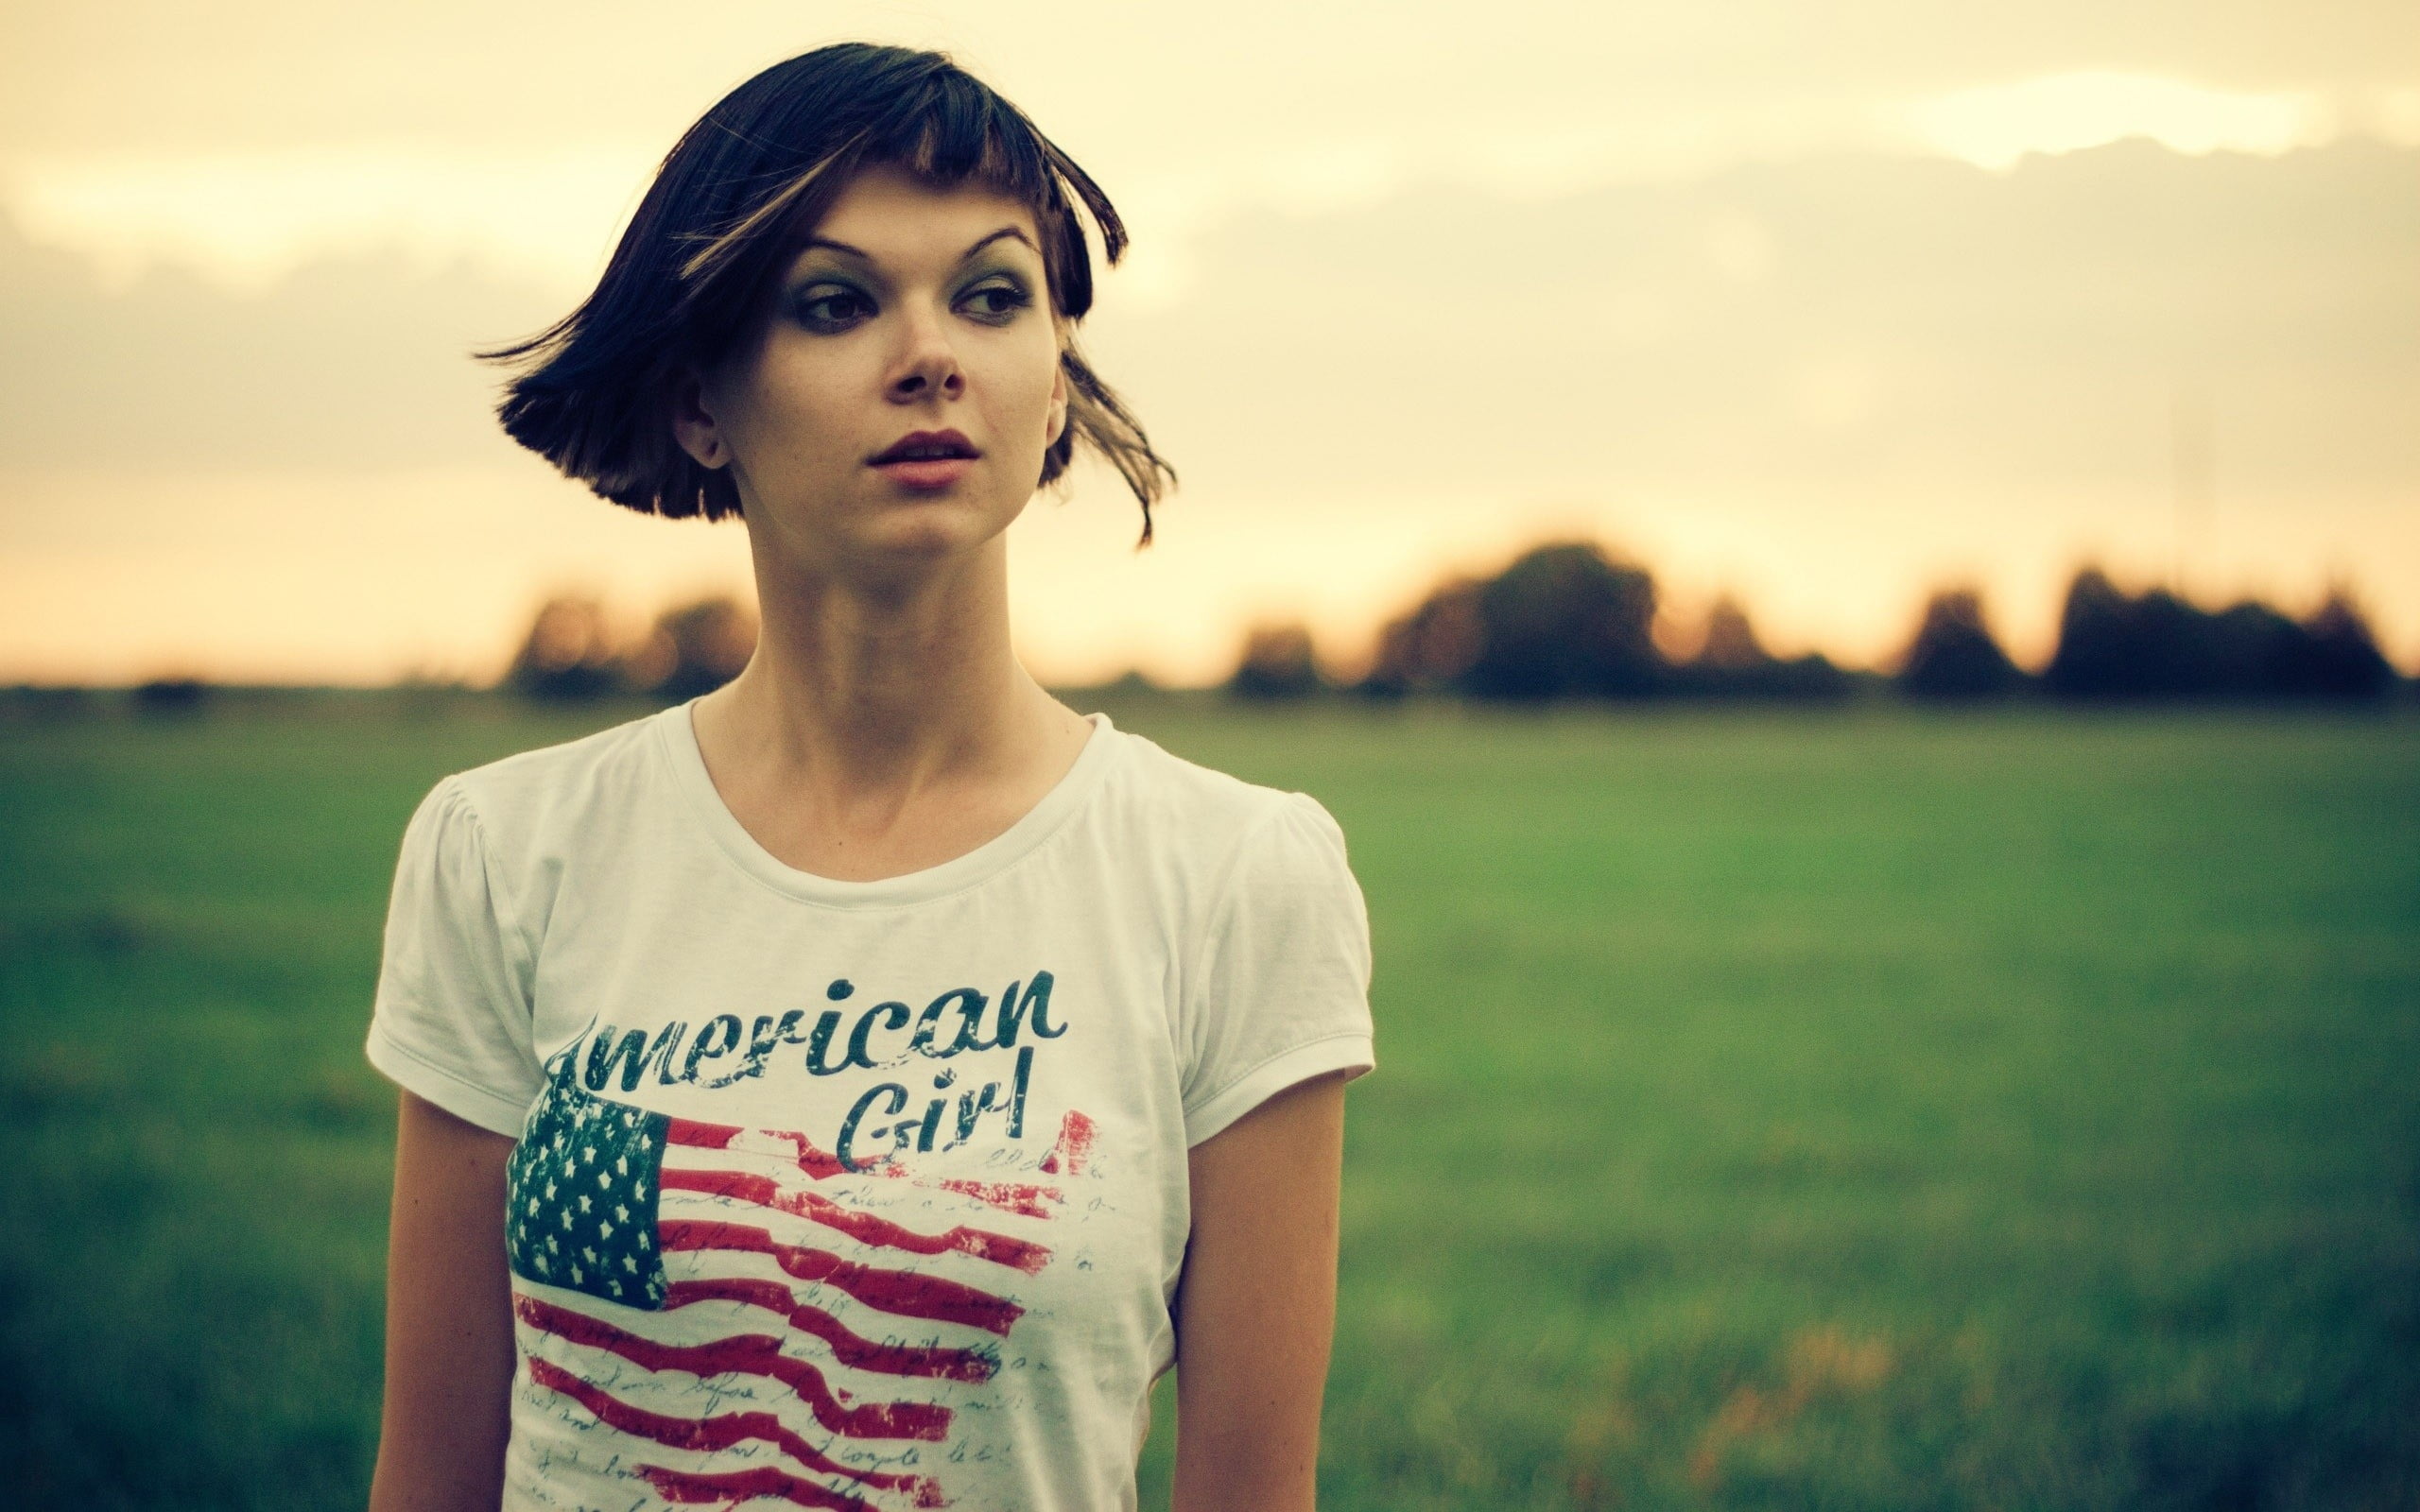 woman wearing white crew-neck shirt with American Girl print HD wallpaper.